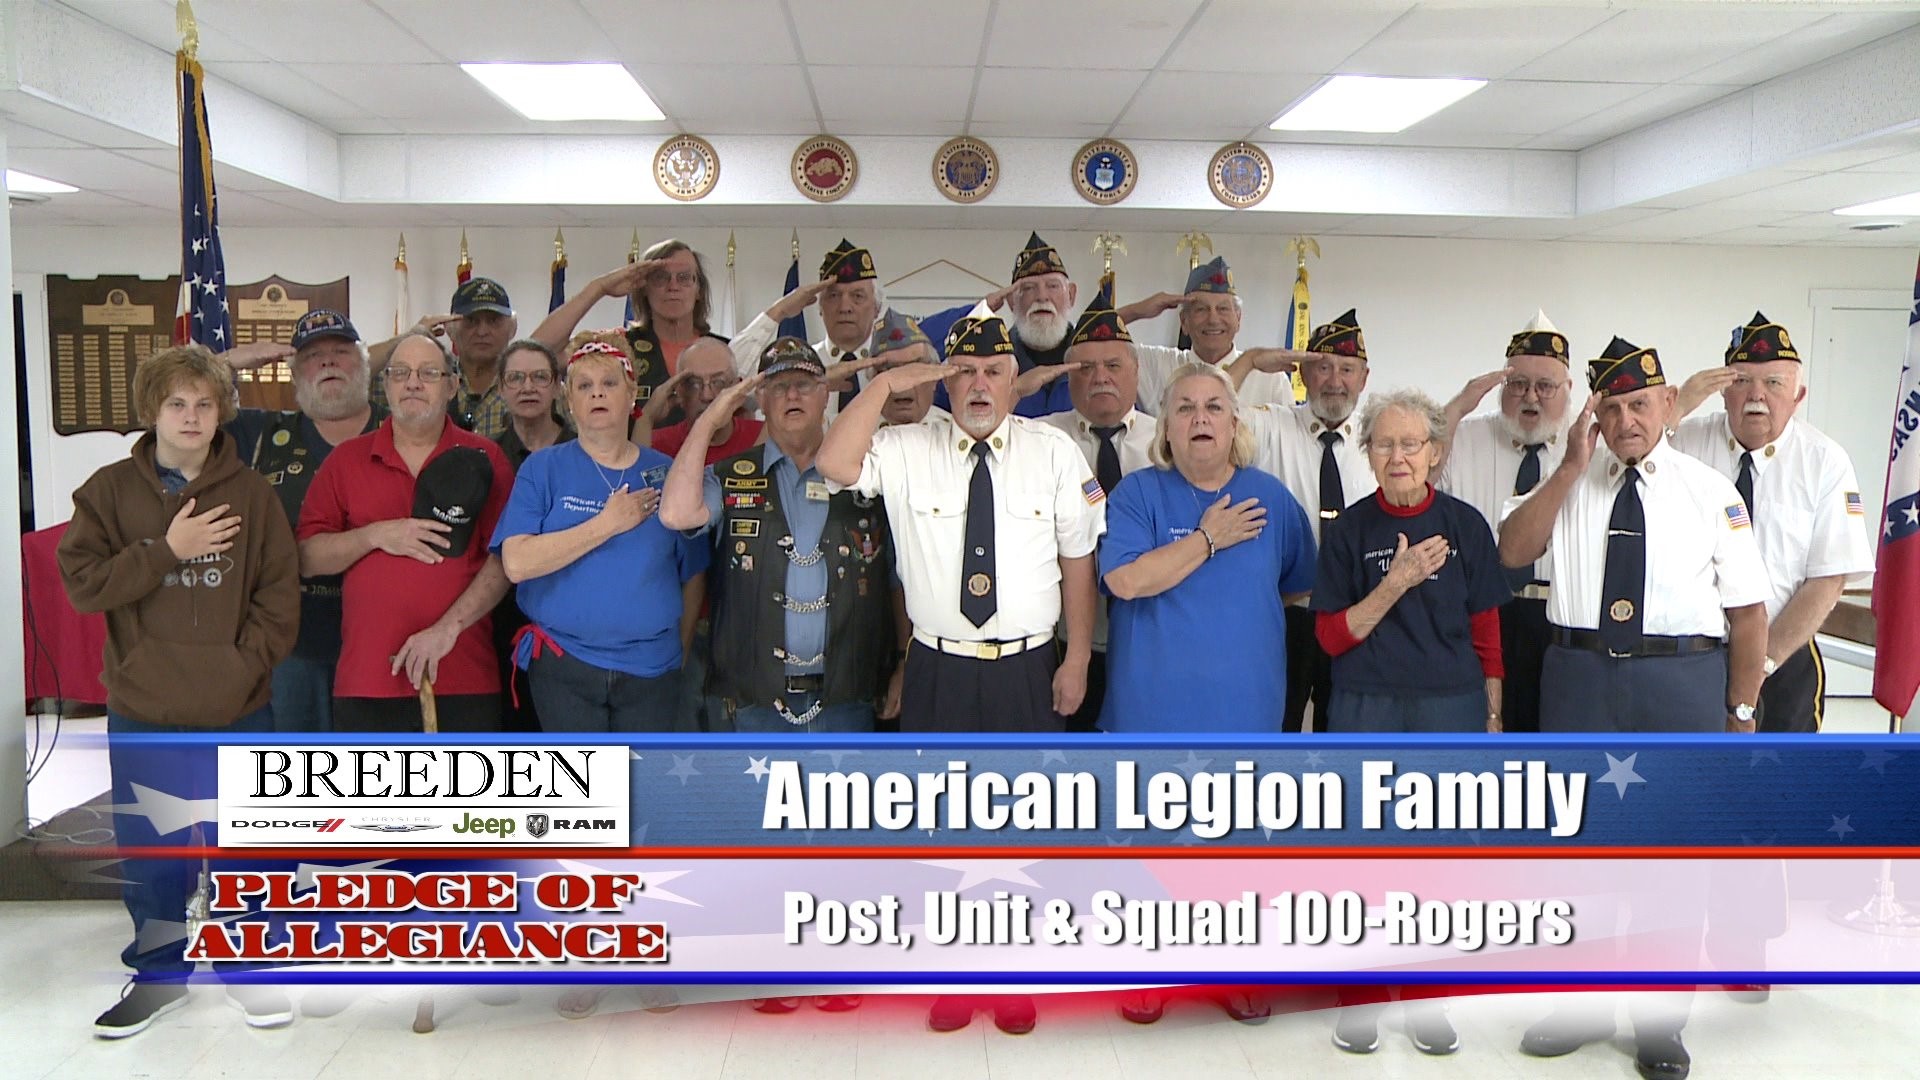 Post, Unit & Squad 100, Rogers - American Legion Family